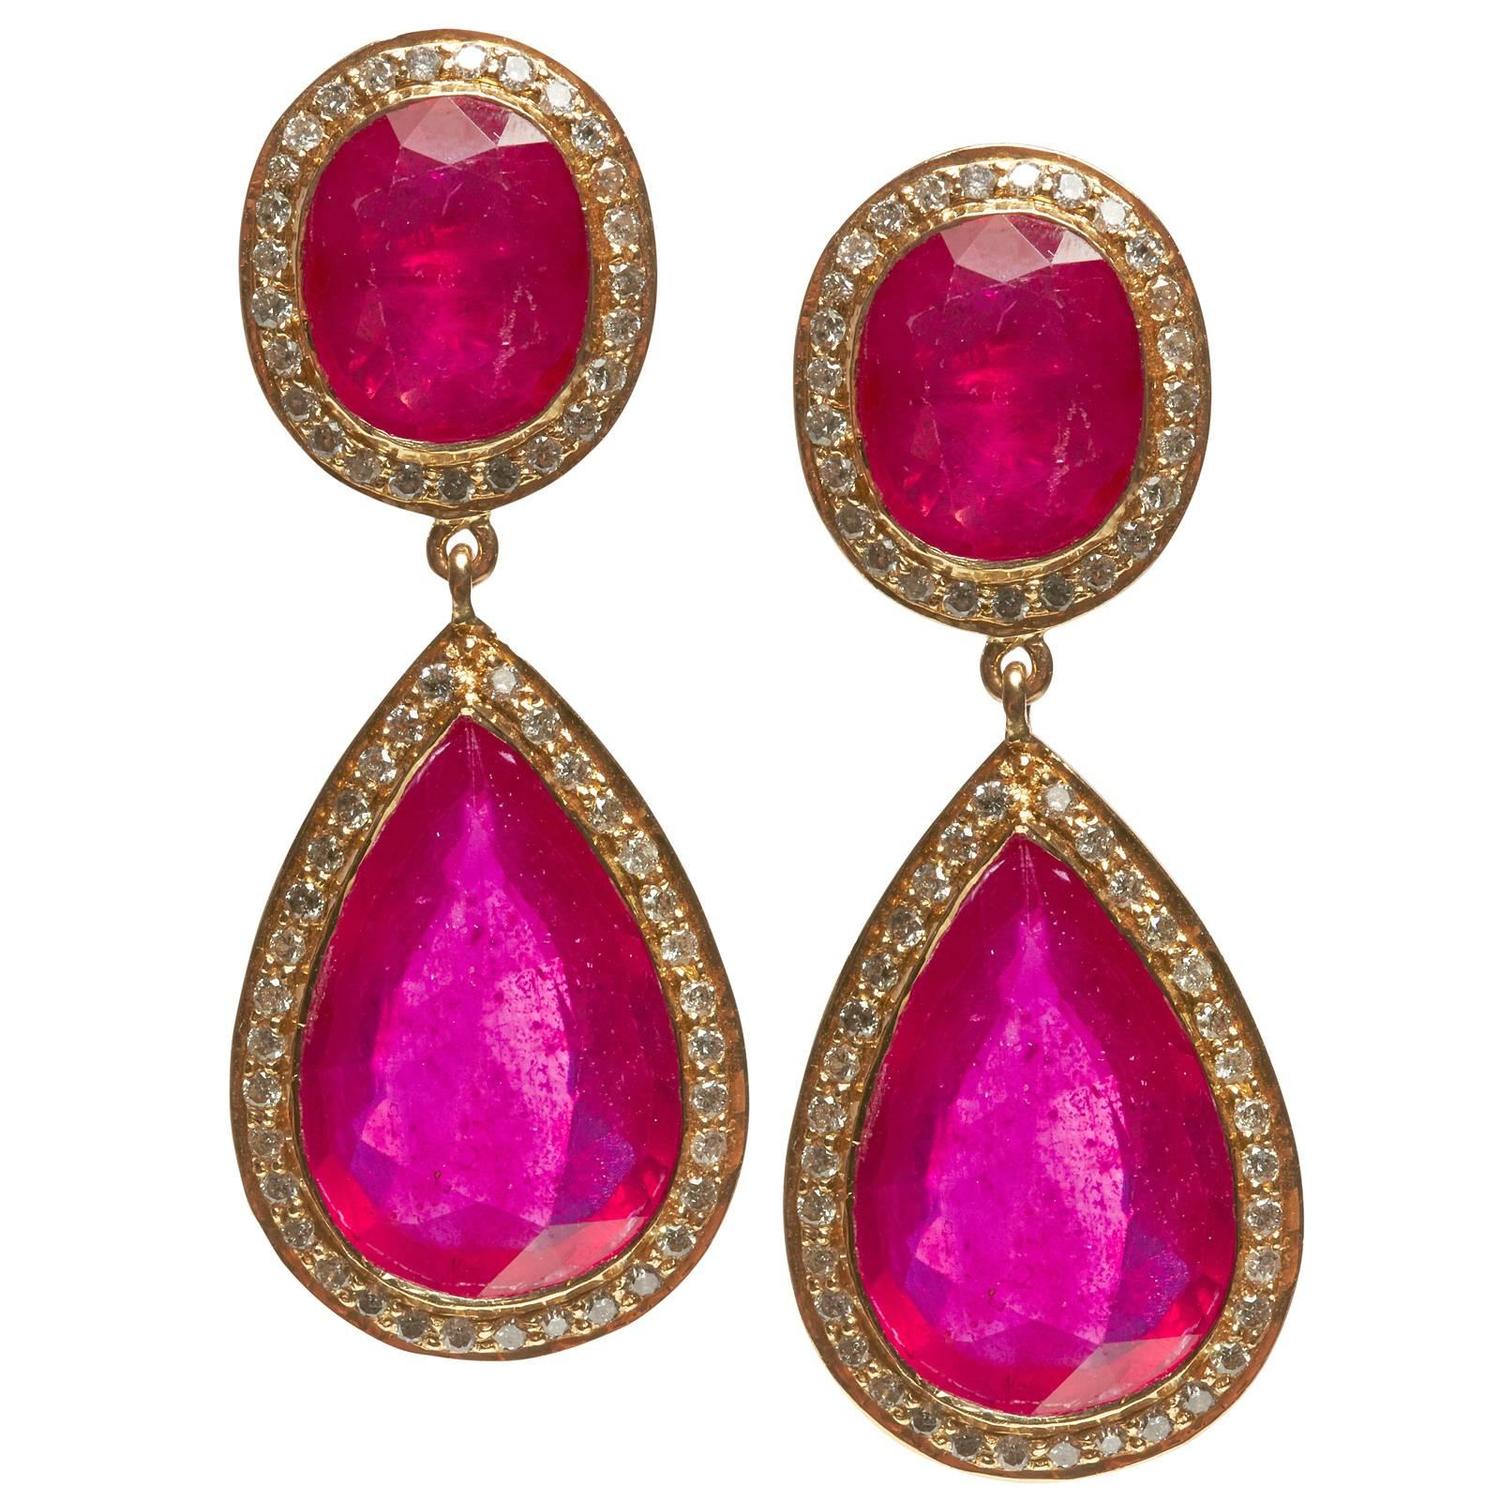 jade jagger fine double ruby earrings with diamonds for sale at 1stdibs MYNBUZW